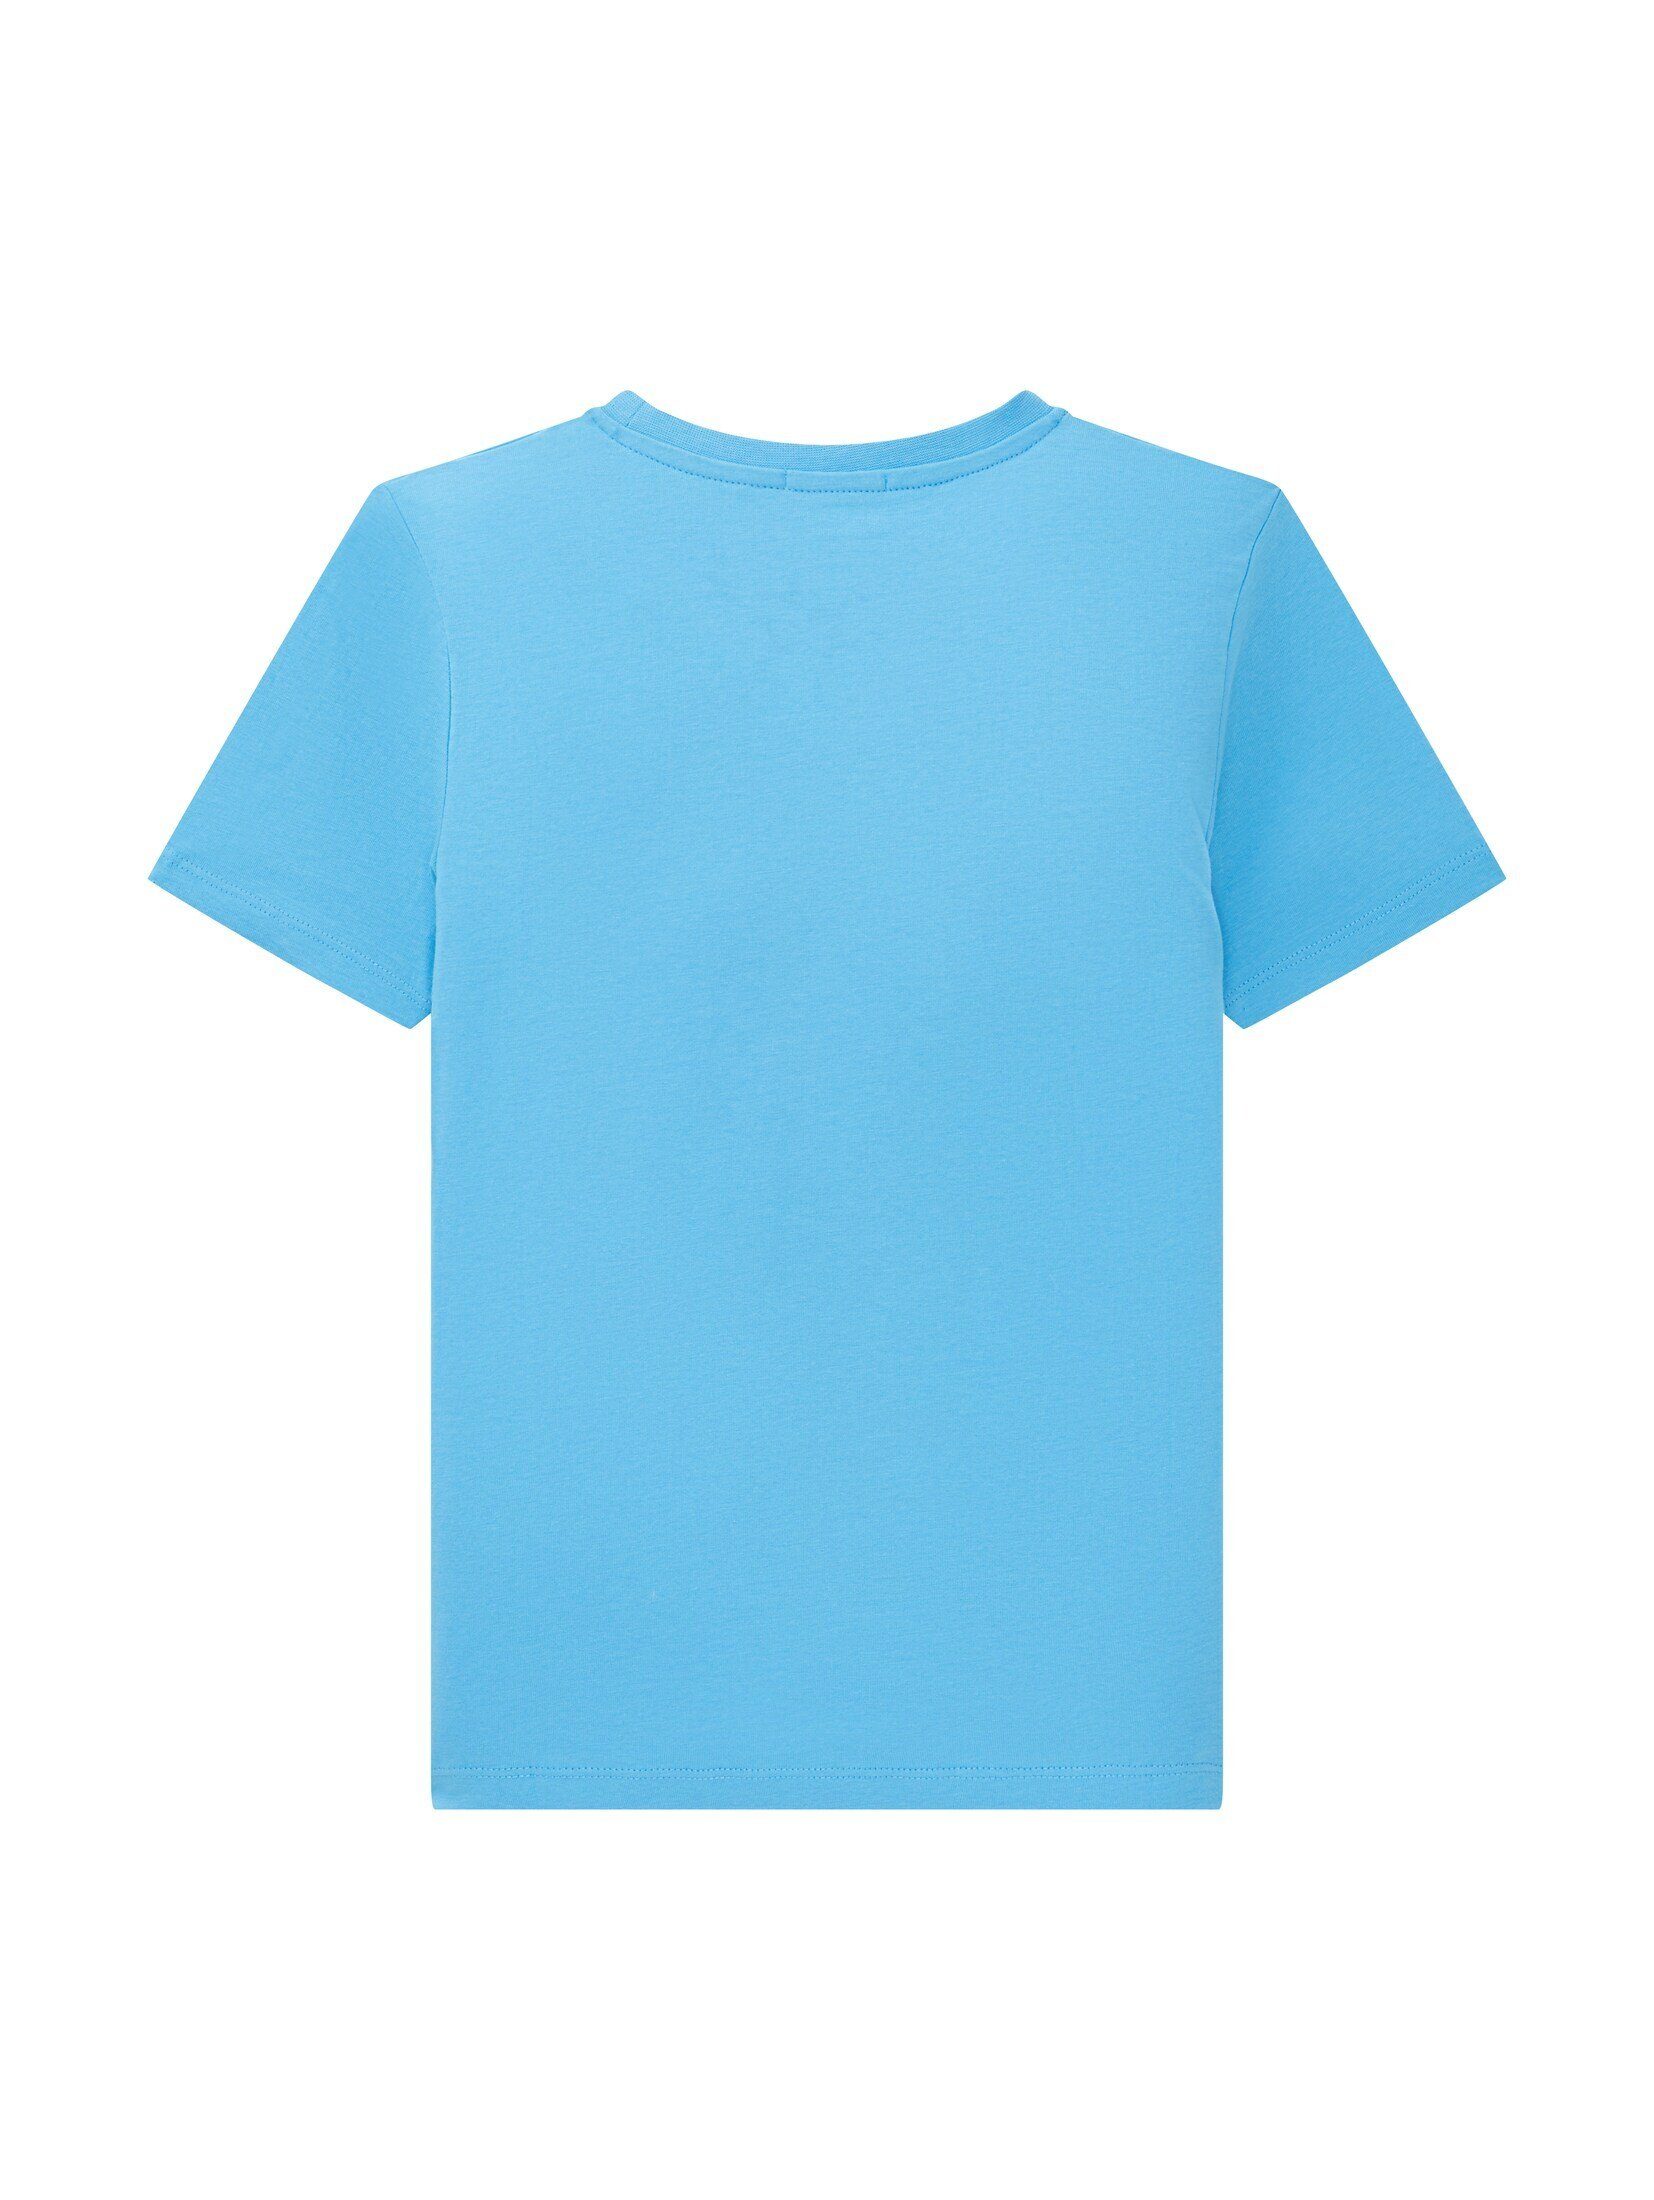 TOM TAILOR T-Shirt T-Shirt mit blue rainy Fotoprint sky